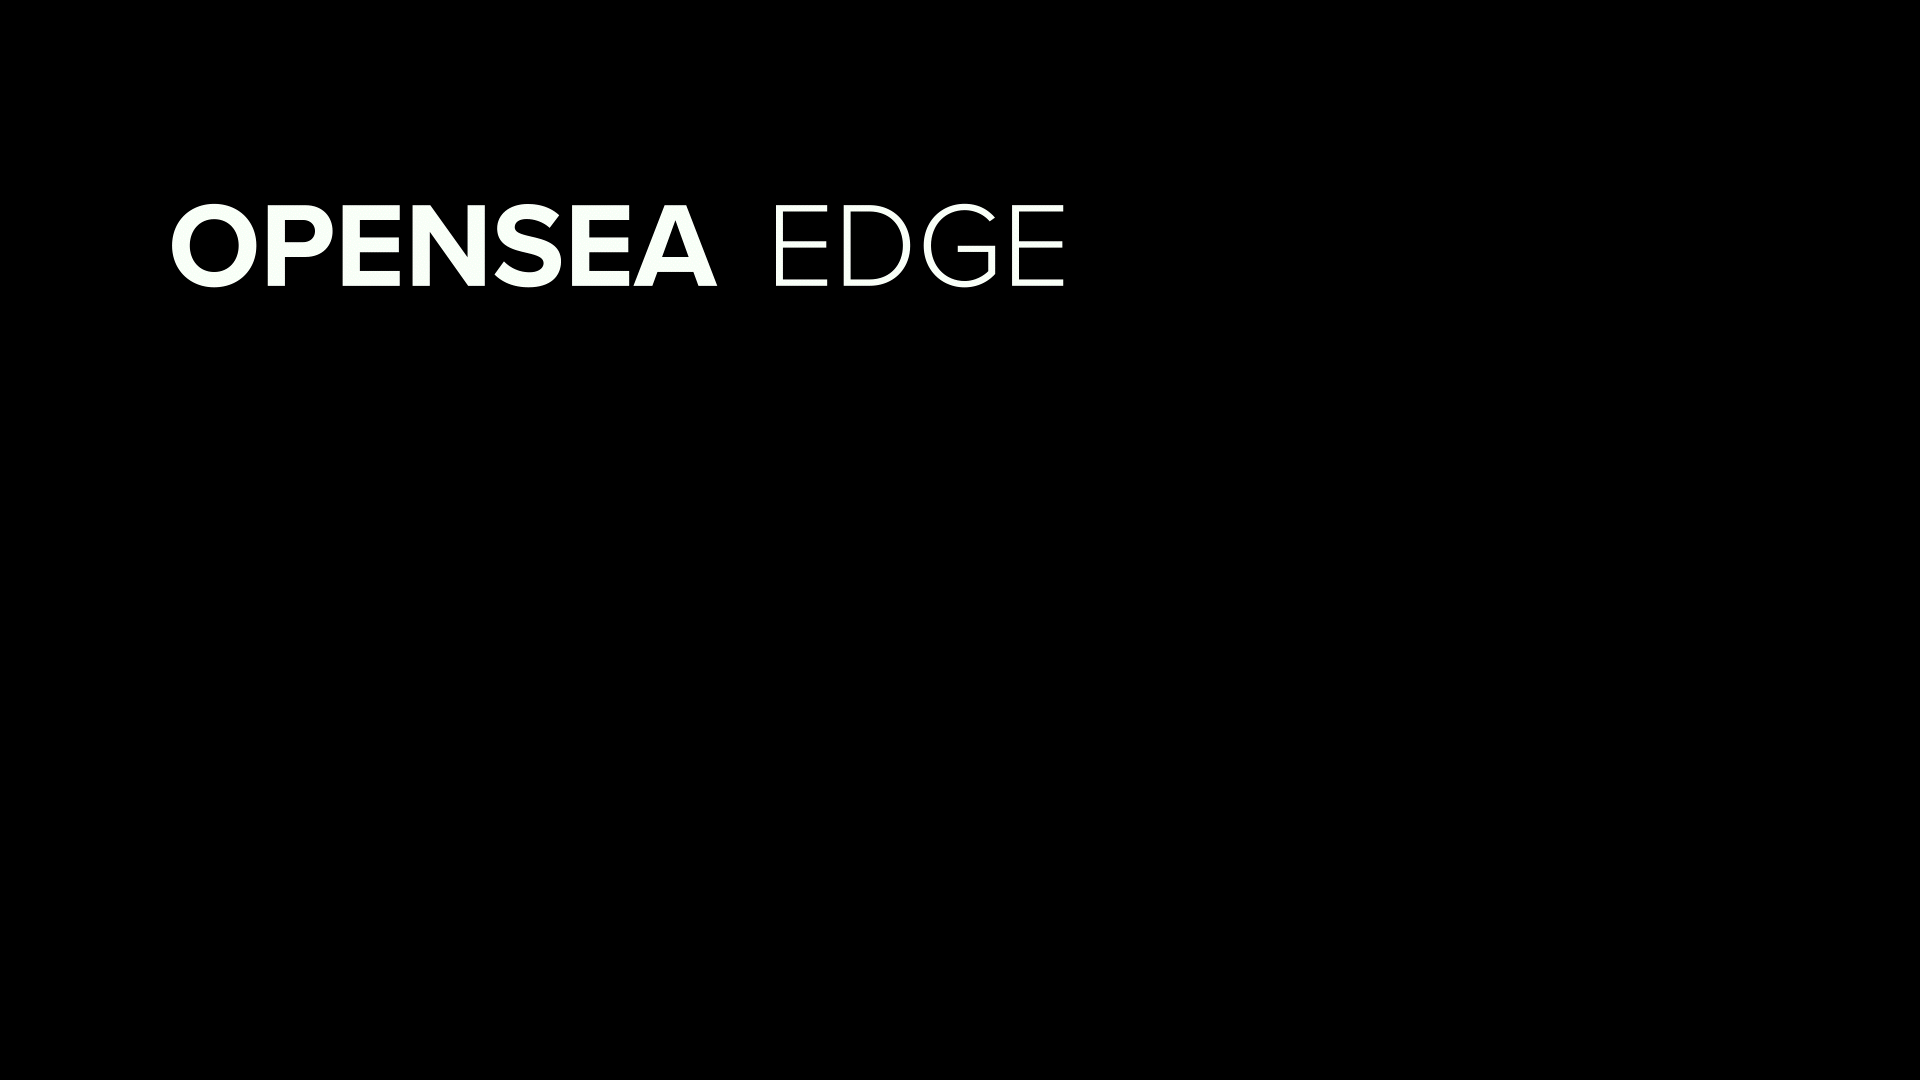 OPENSEA Edge autonomy solution